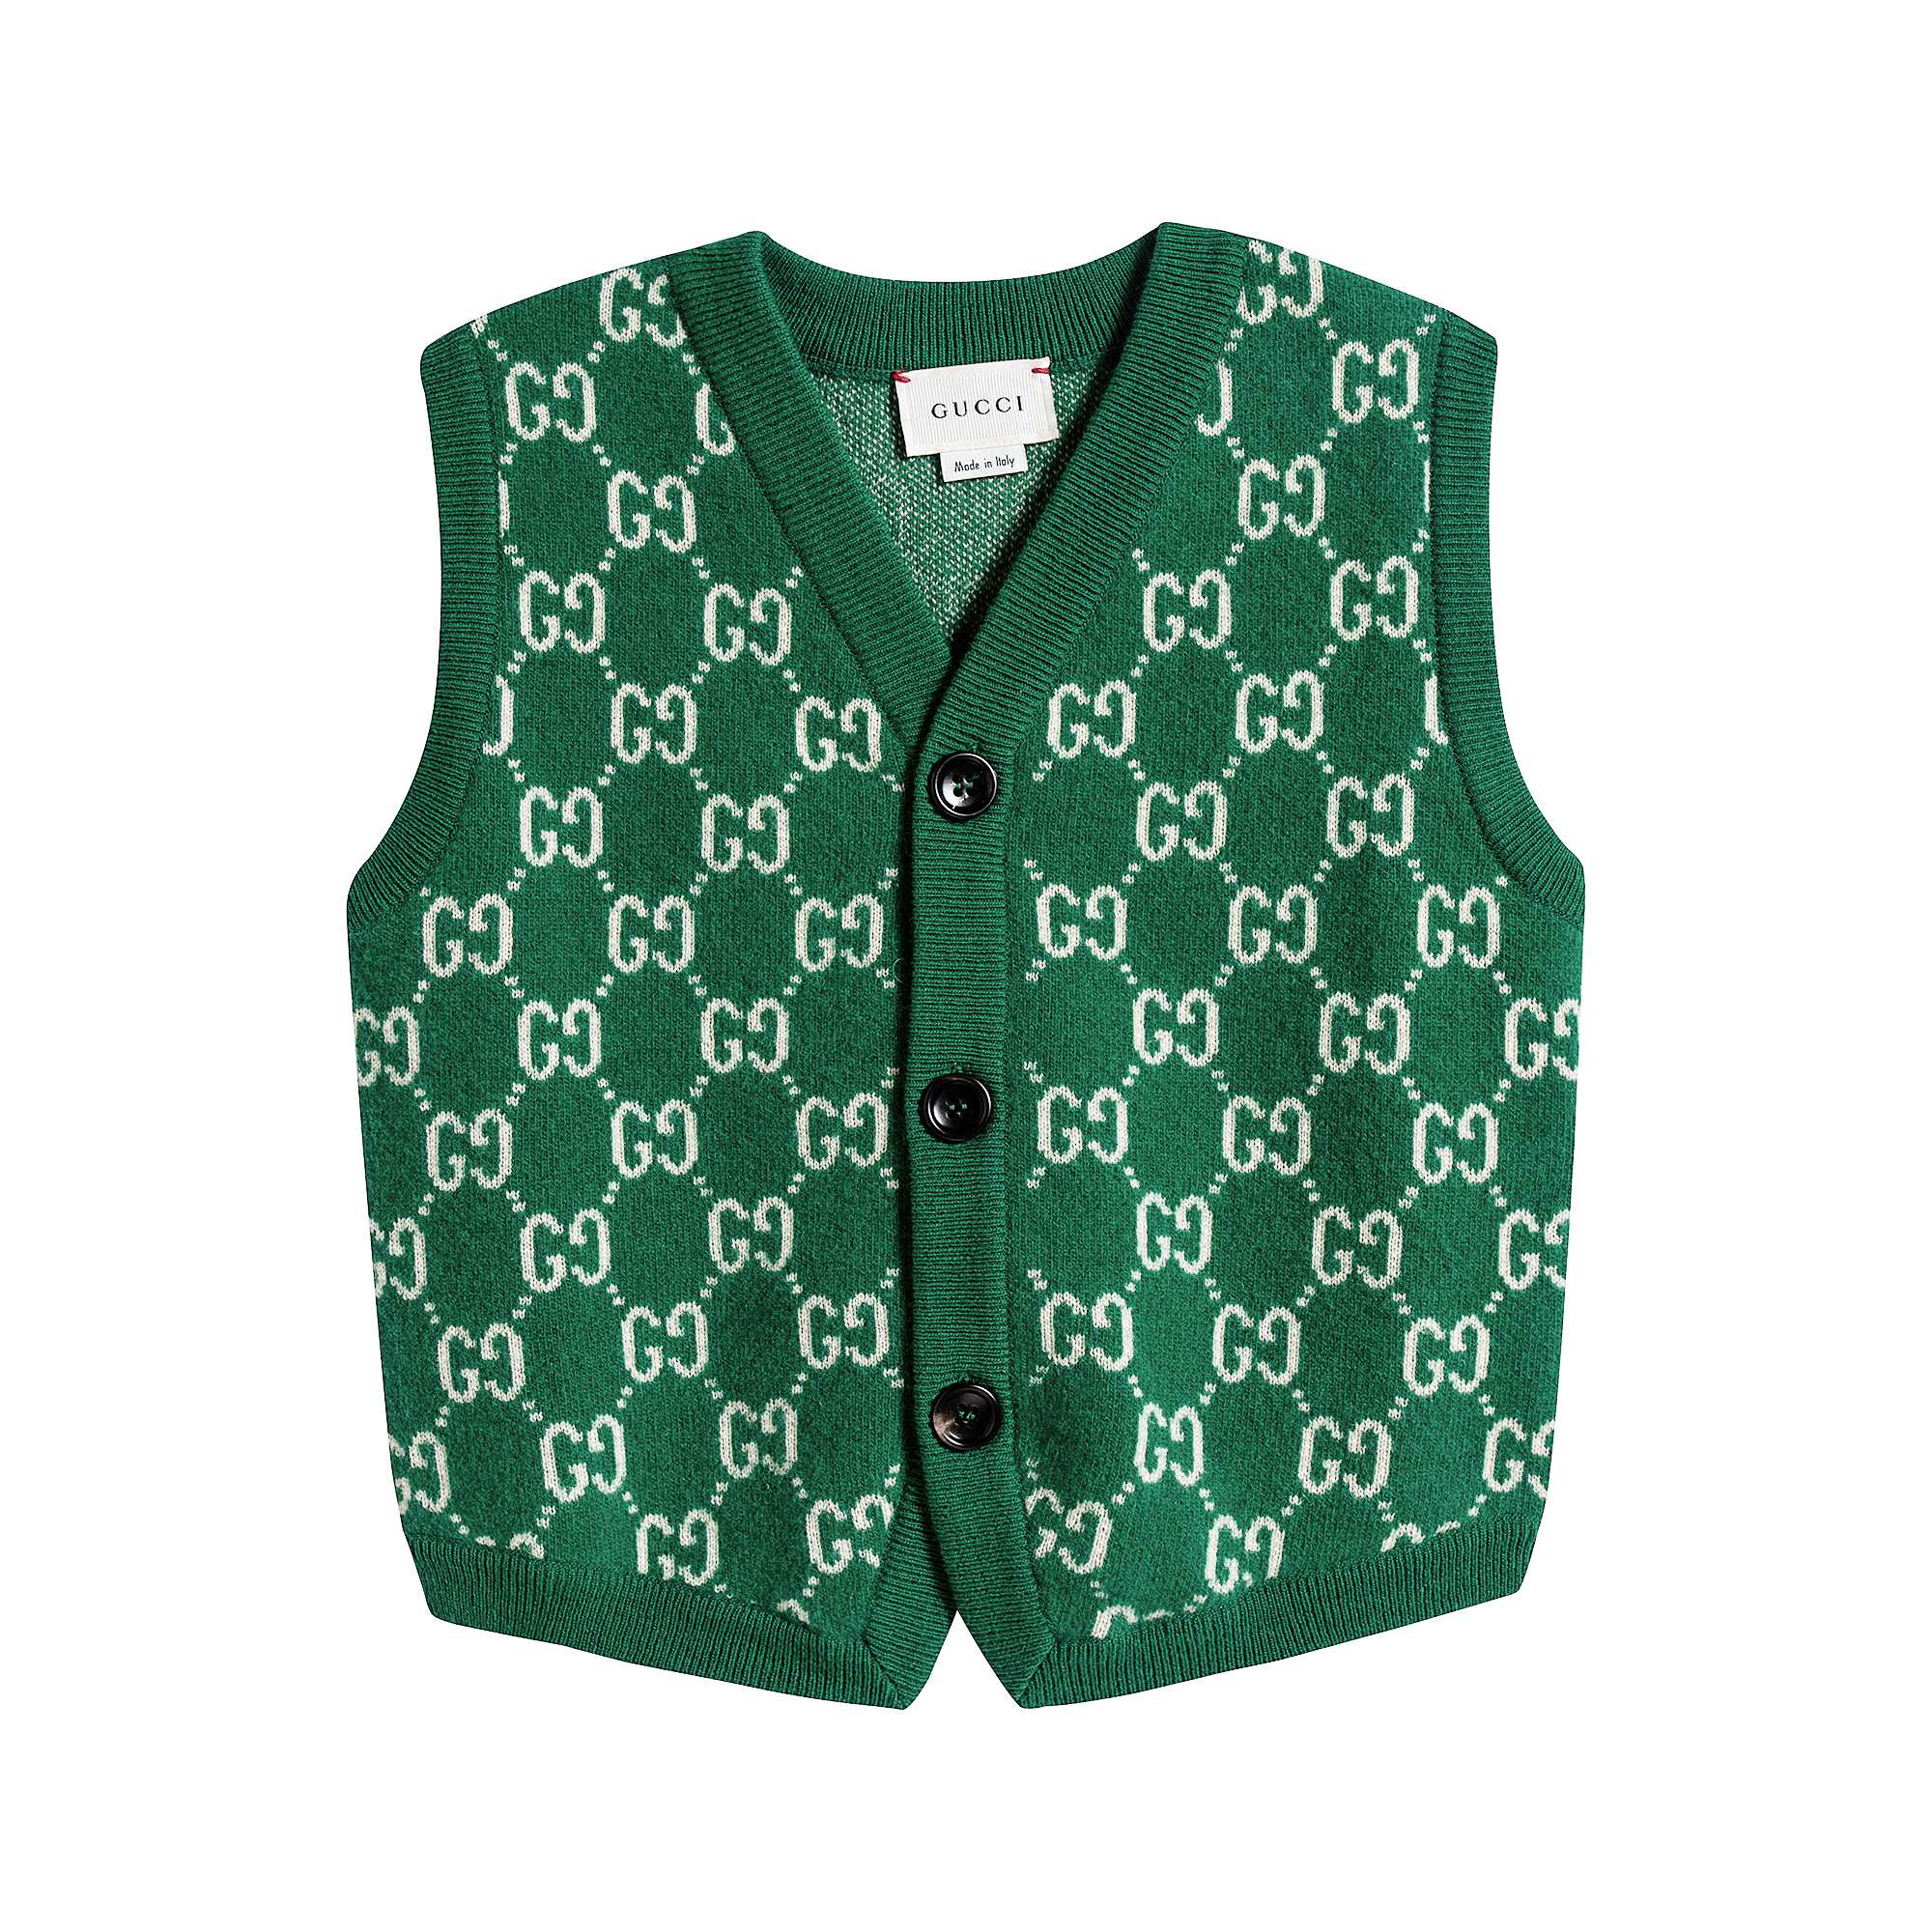 Boys & Girls Green GG Knit Vest